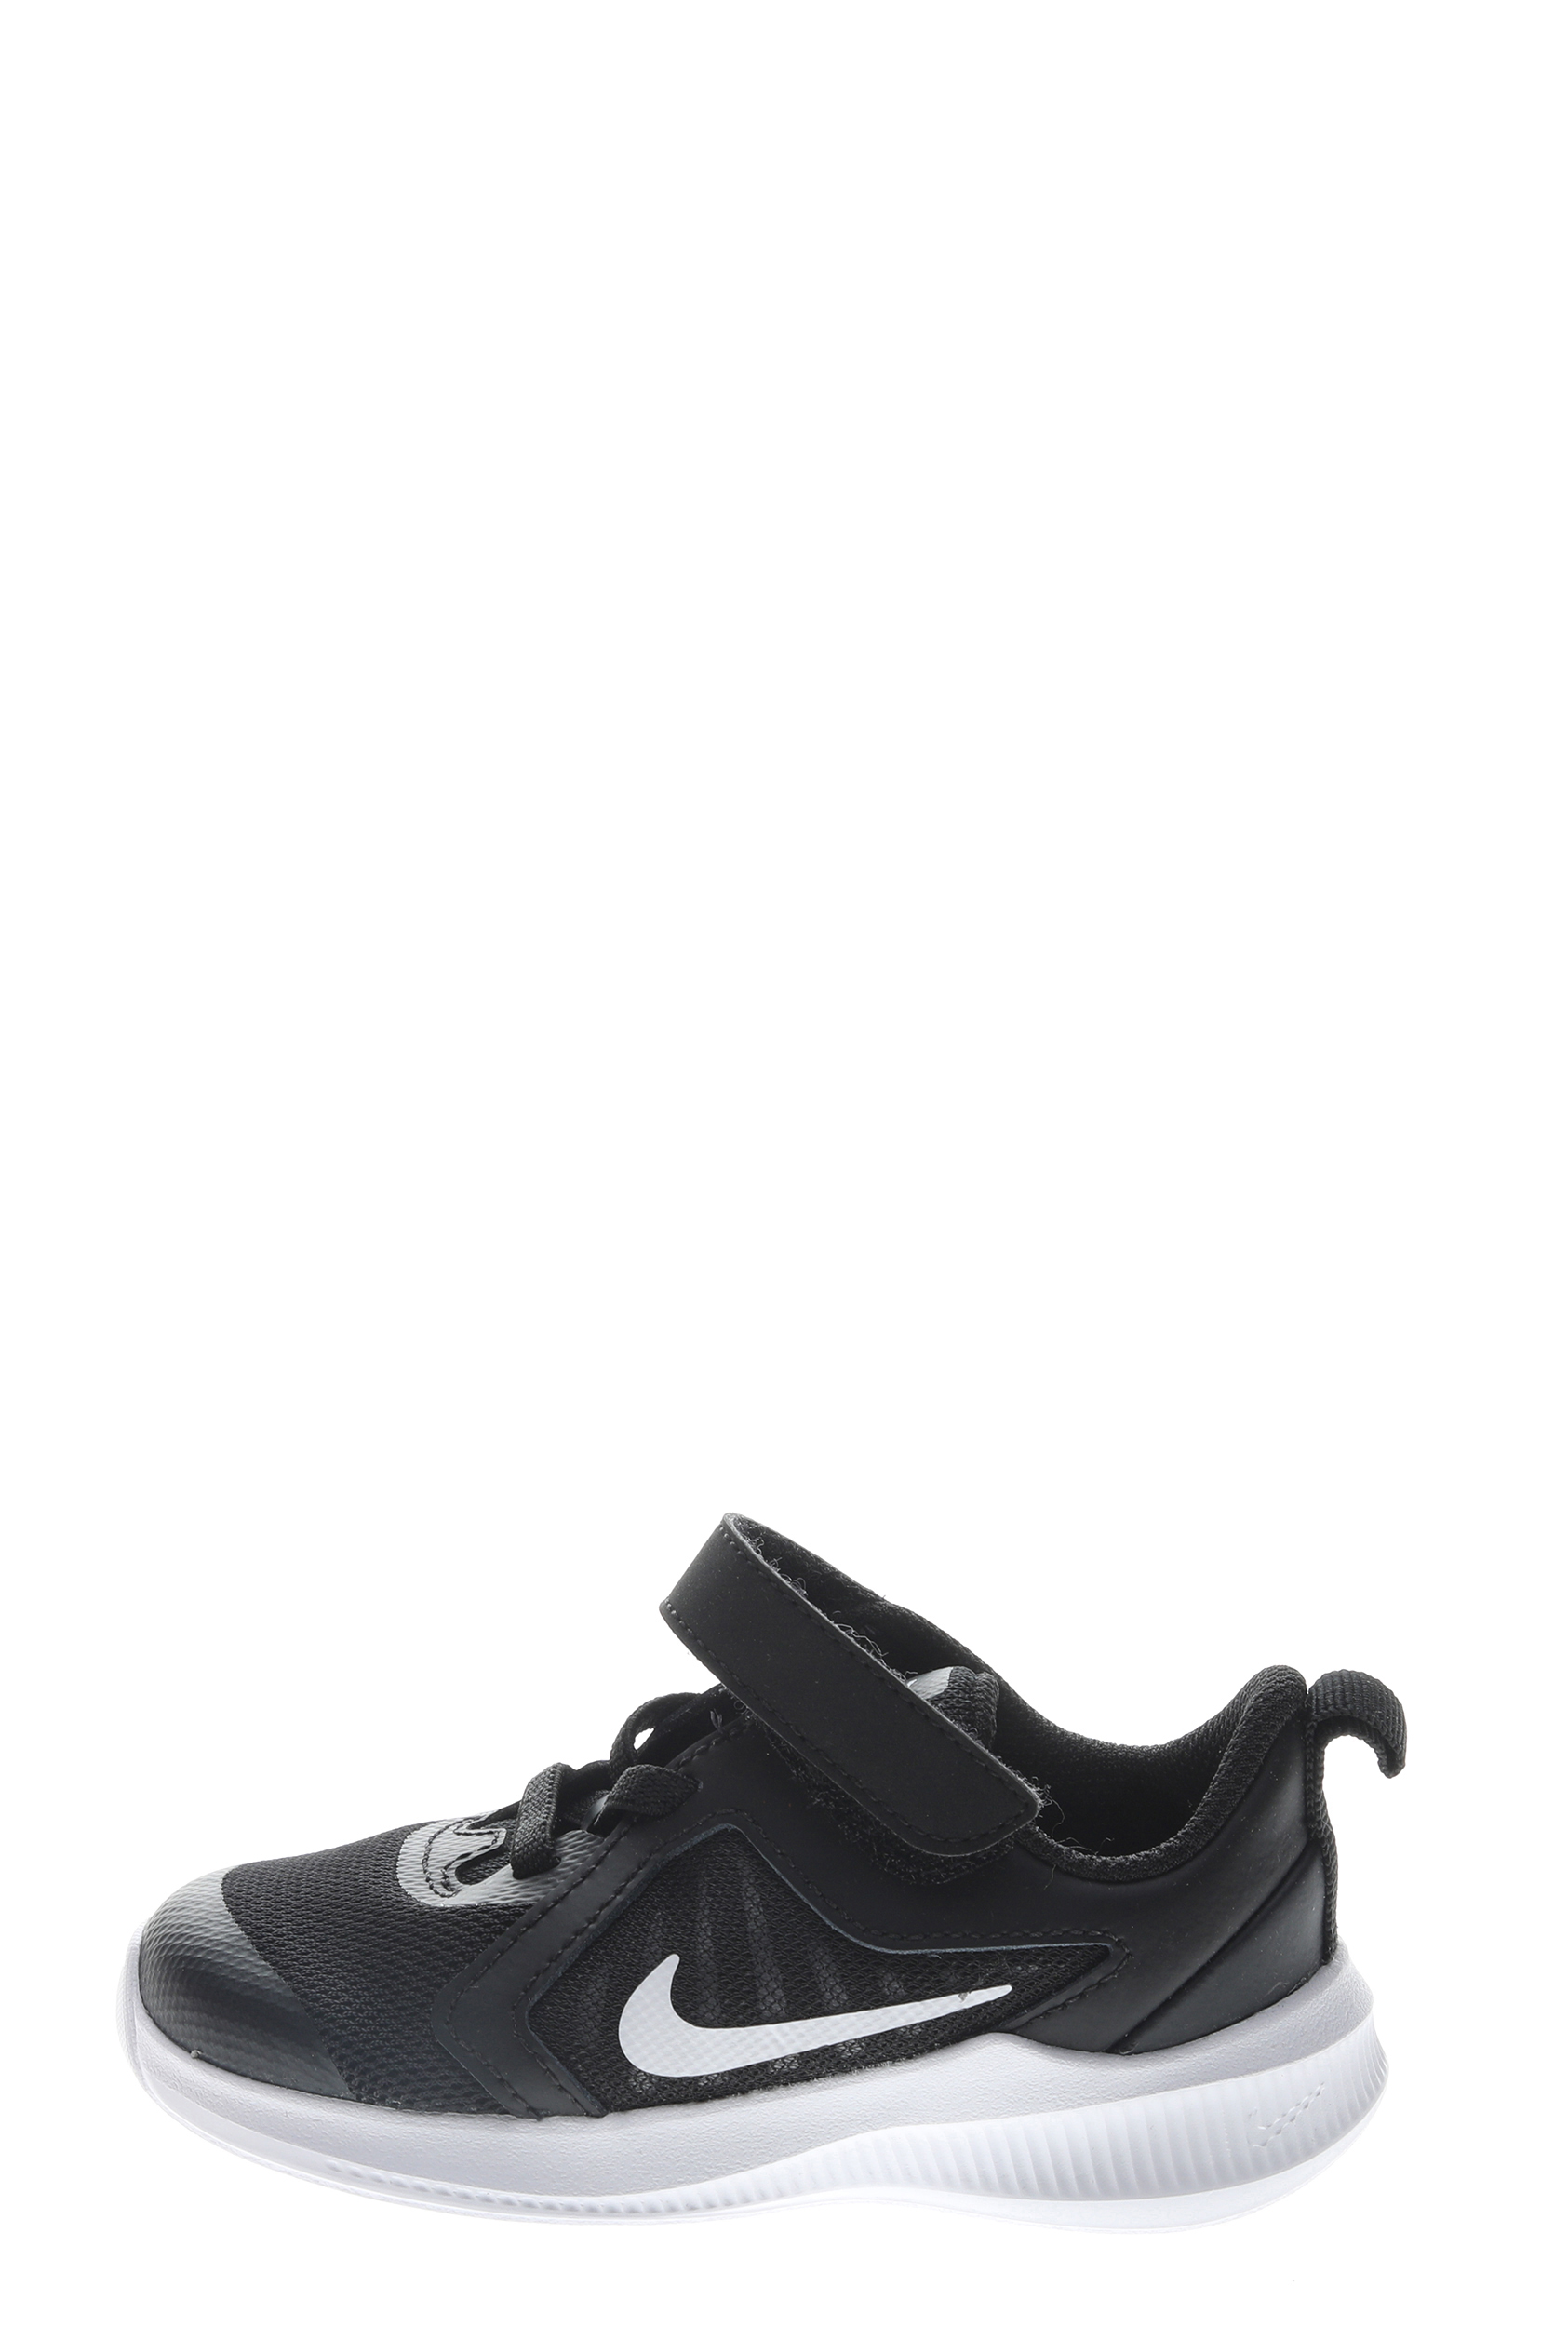 NIKE - Βρεφικά αθλητικά παπούτσια NIKE DOWNSHIFTER 10 (TDV) μαύρα λευκά